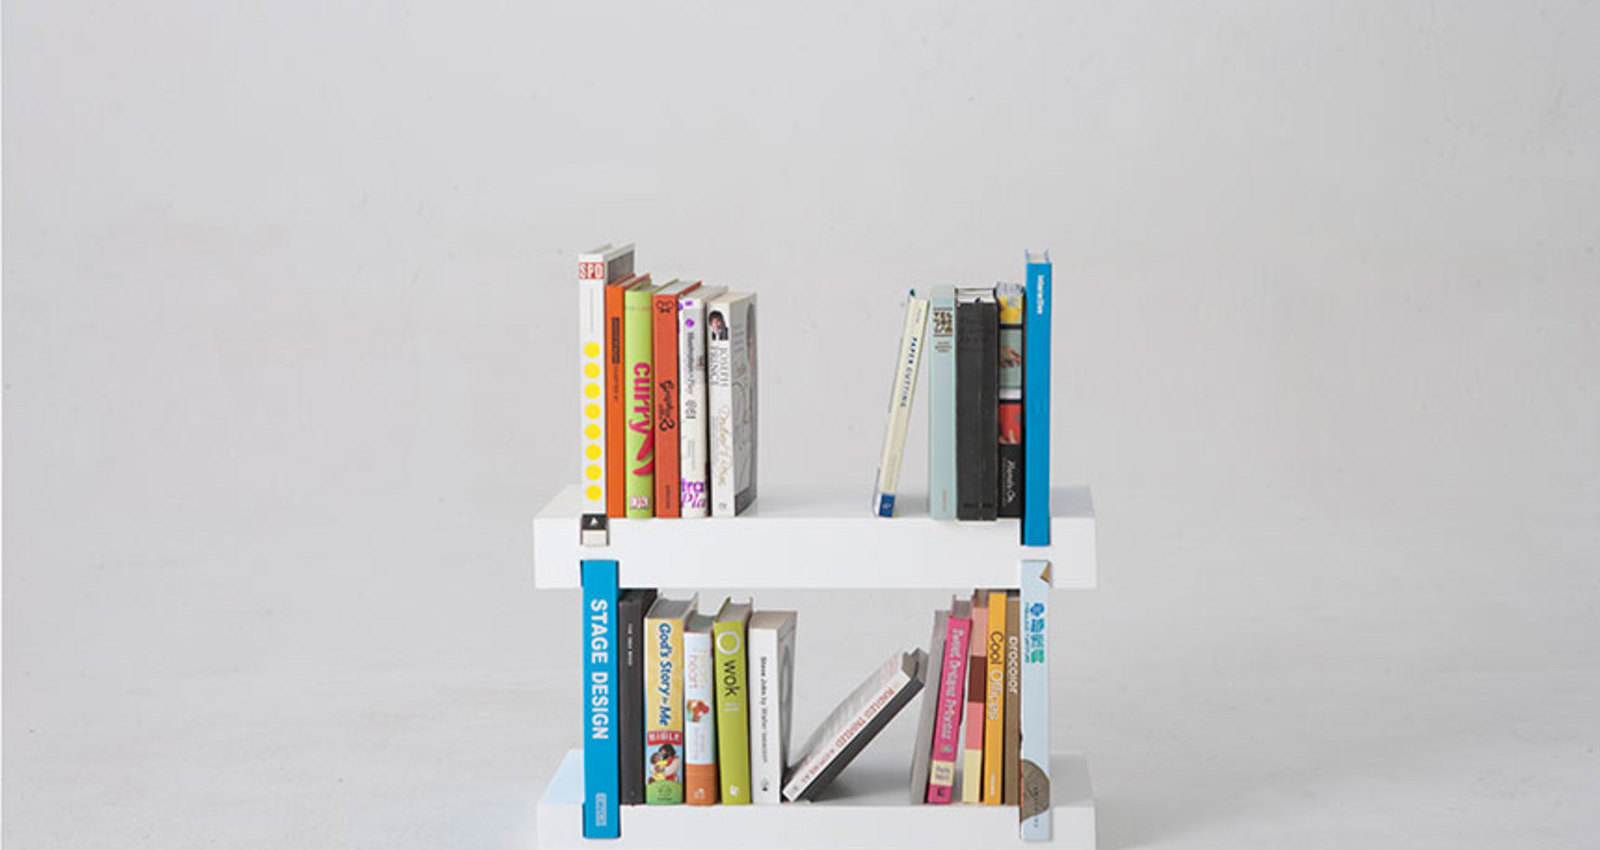 Minimal Bookshelf